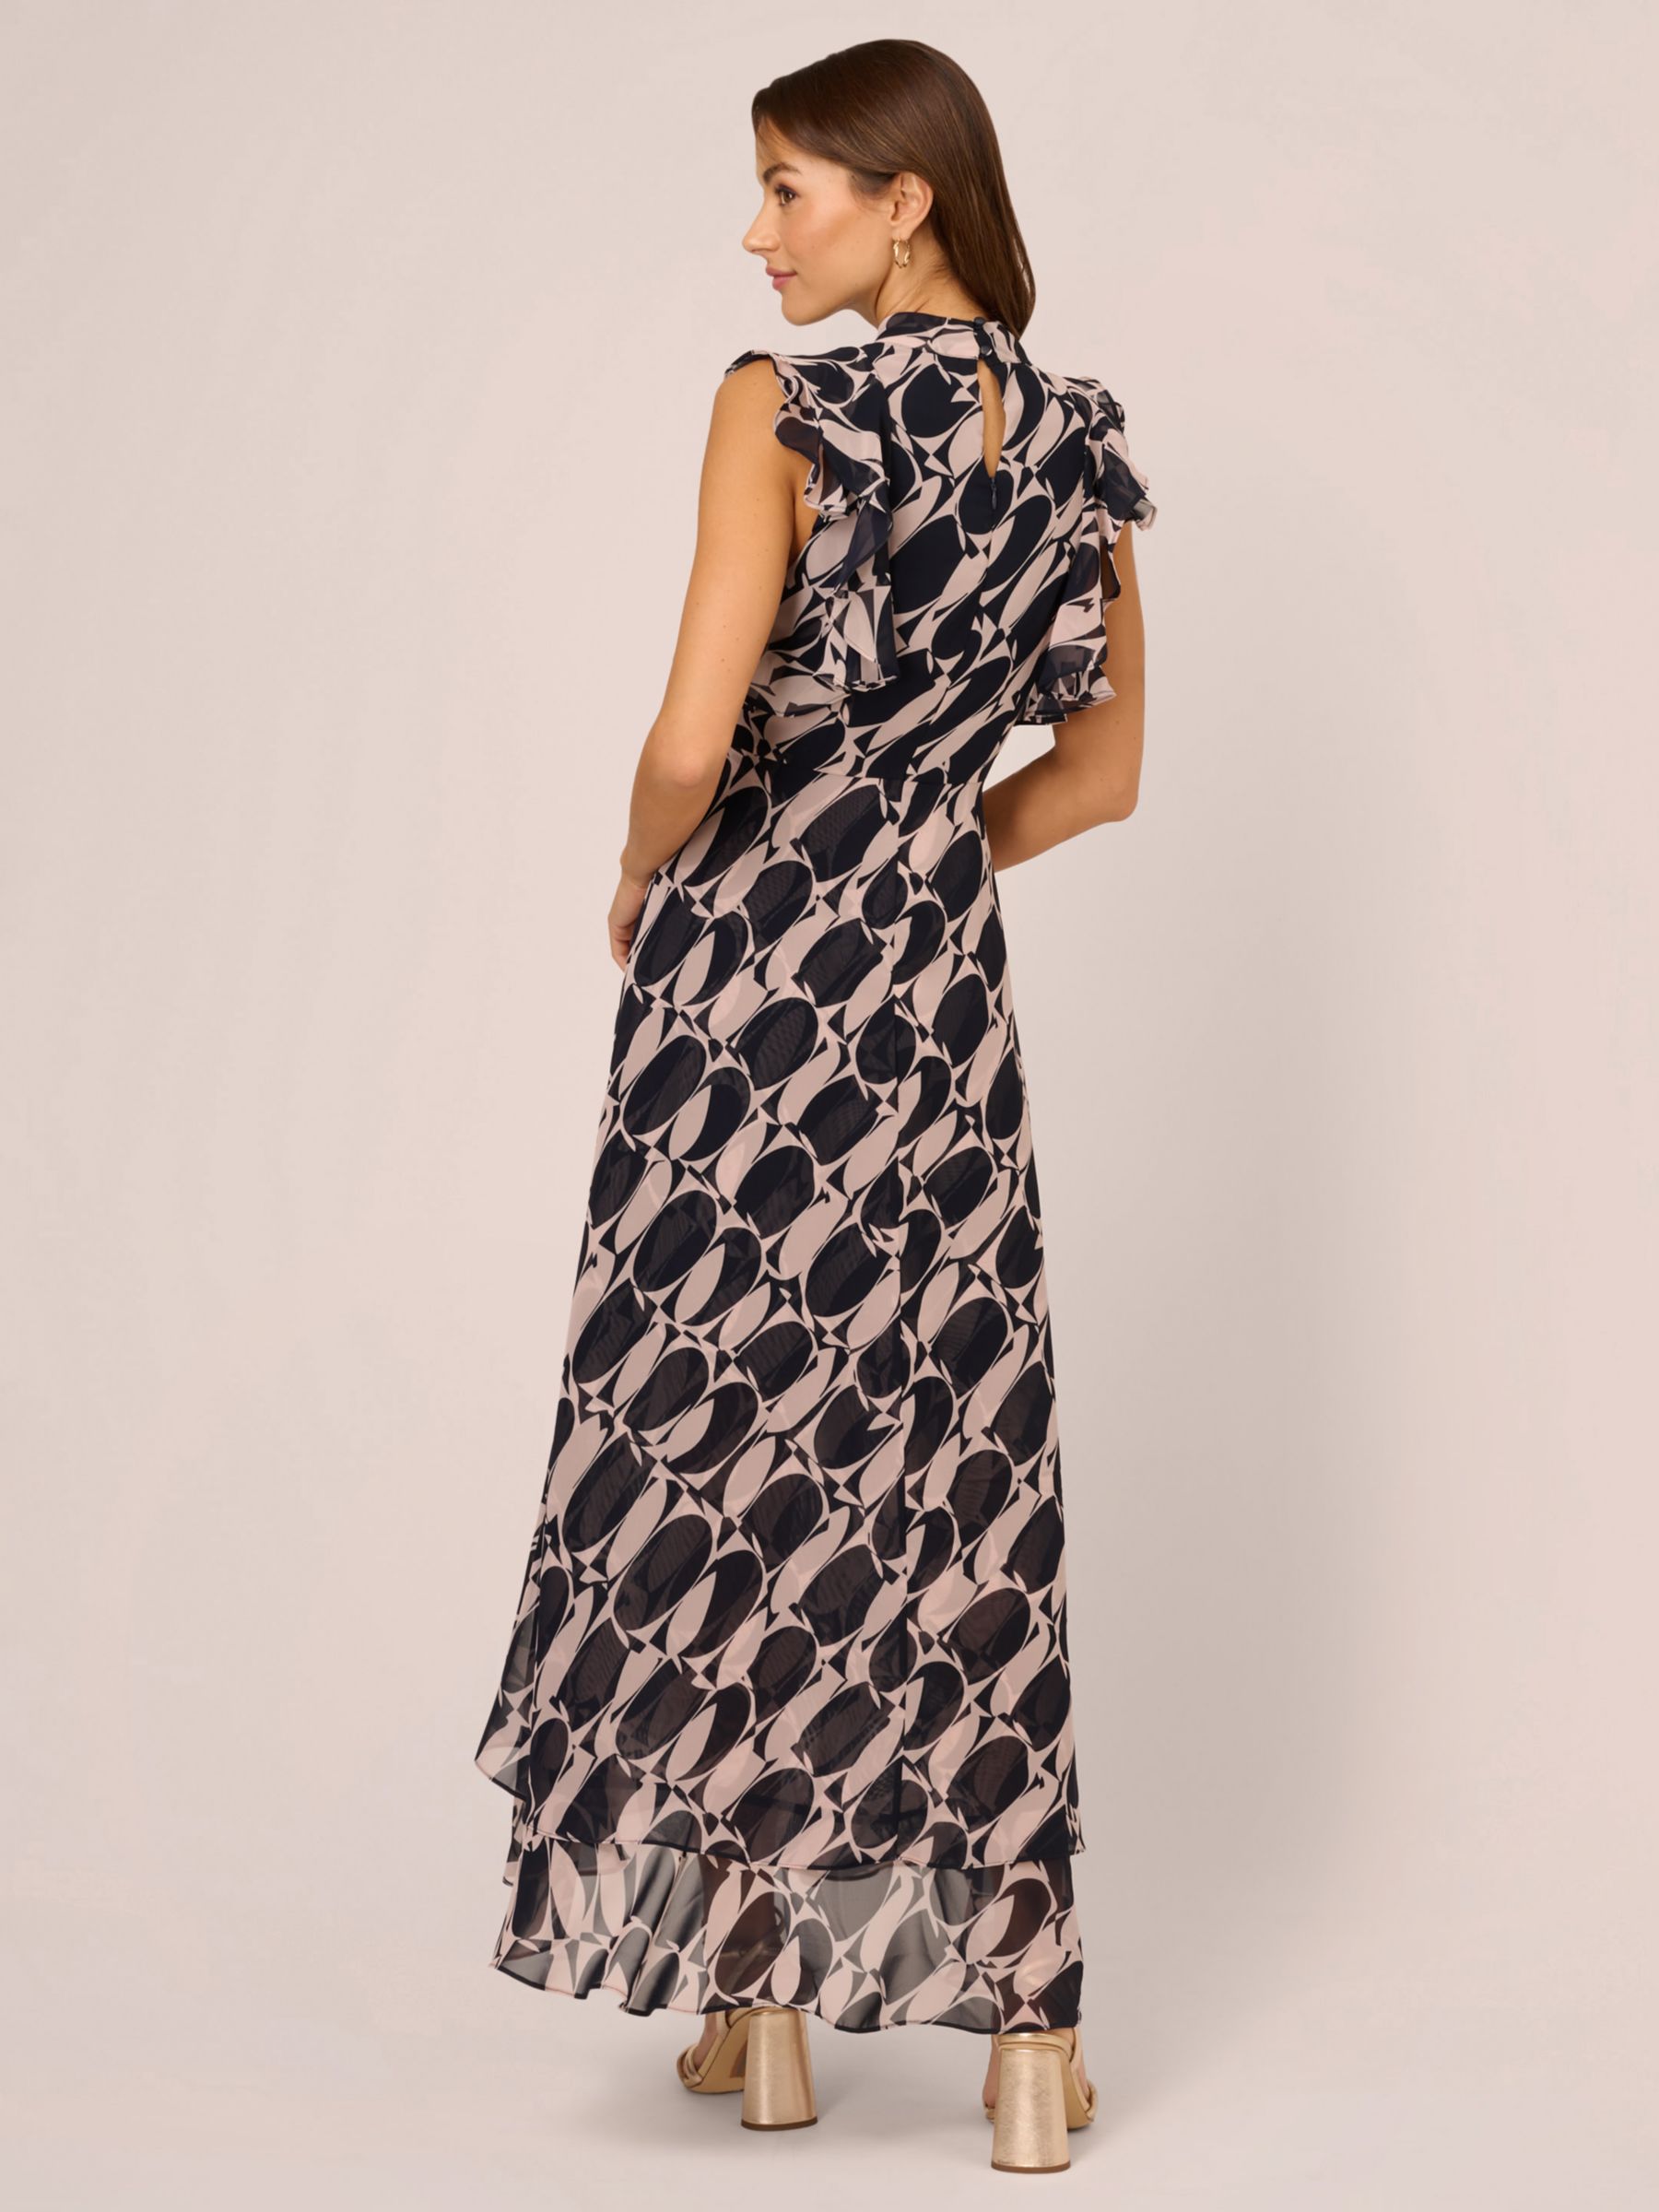 Adrianna Papell Abstract Print Frill Maxi Dress, Navy/Blush, 6